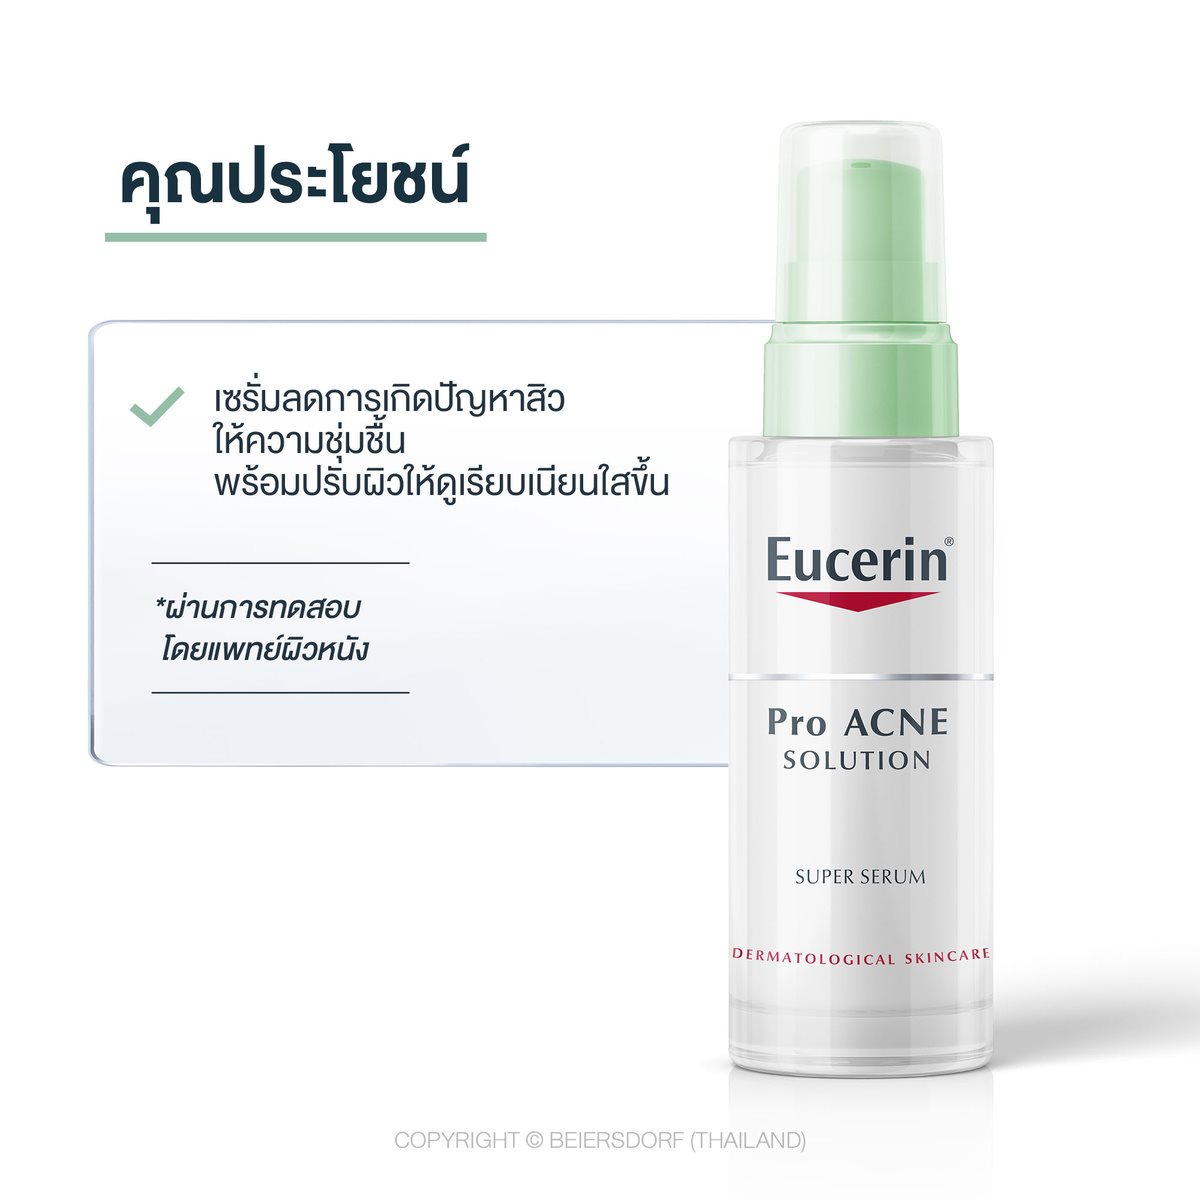 Eucerin Pro Acne Solution Super Serum เซรั่มบํารุงผิวหน้า  ดูแลผิวที่มีปัญหาเป็นสิวง่าย | Eucerin